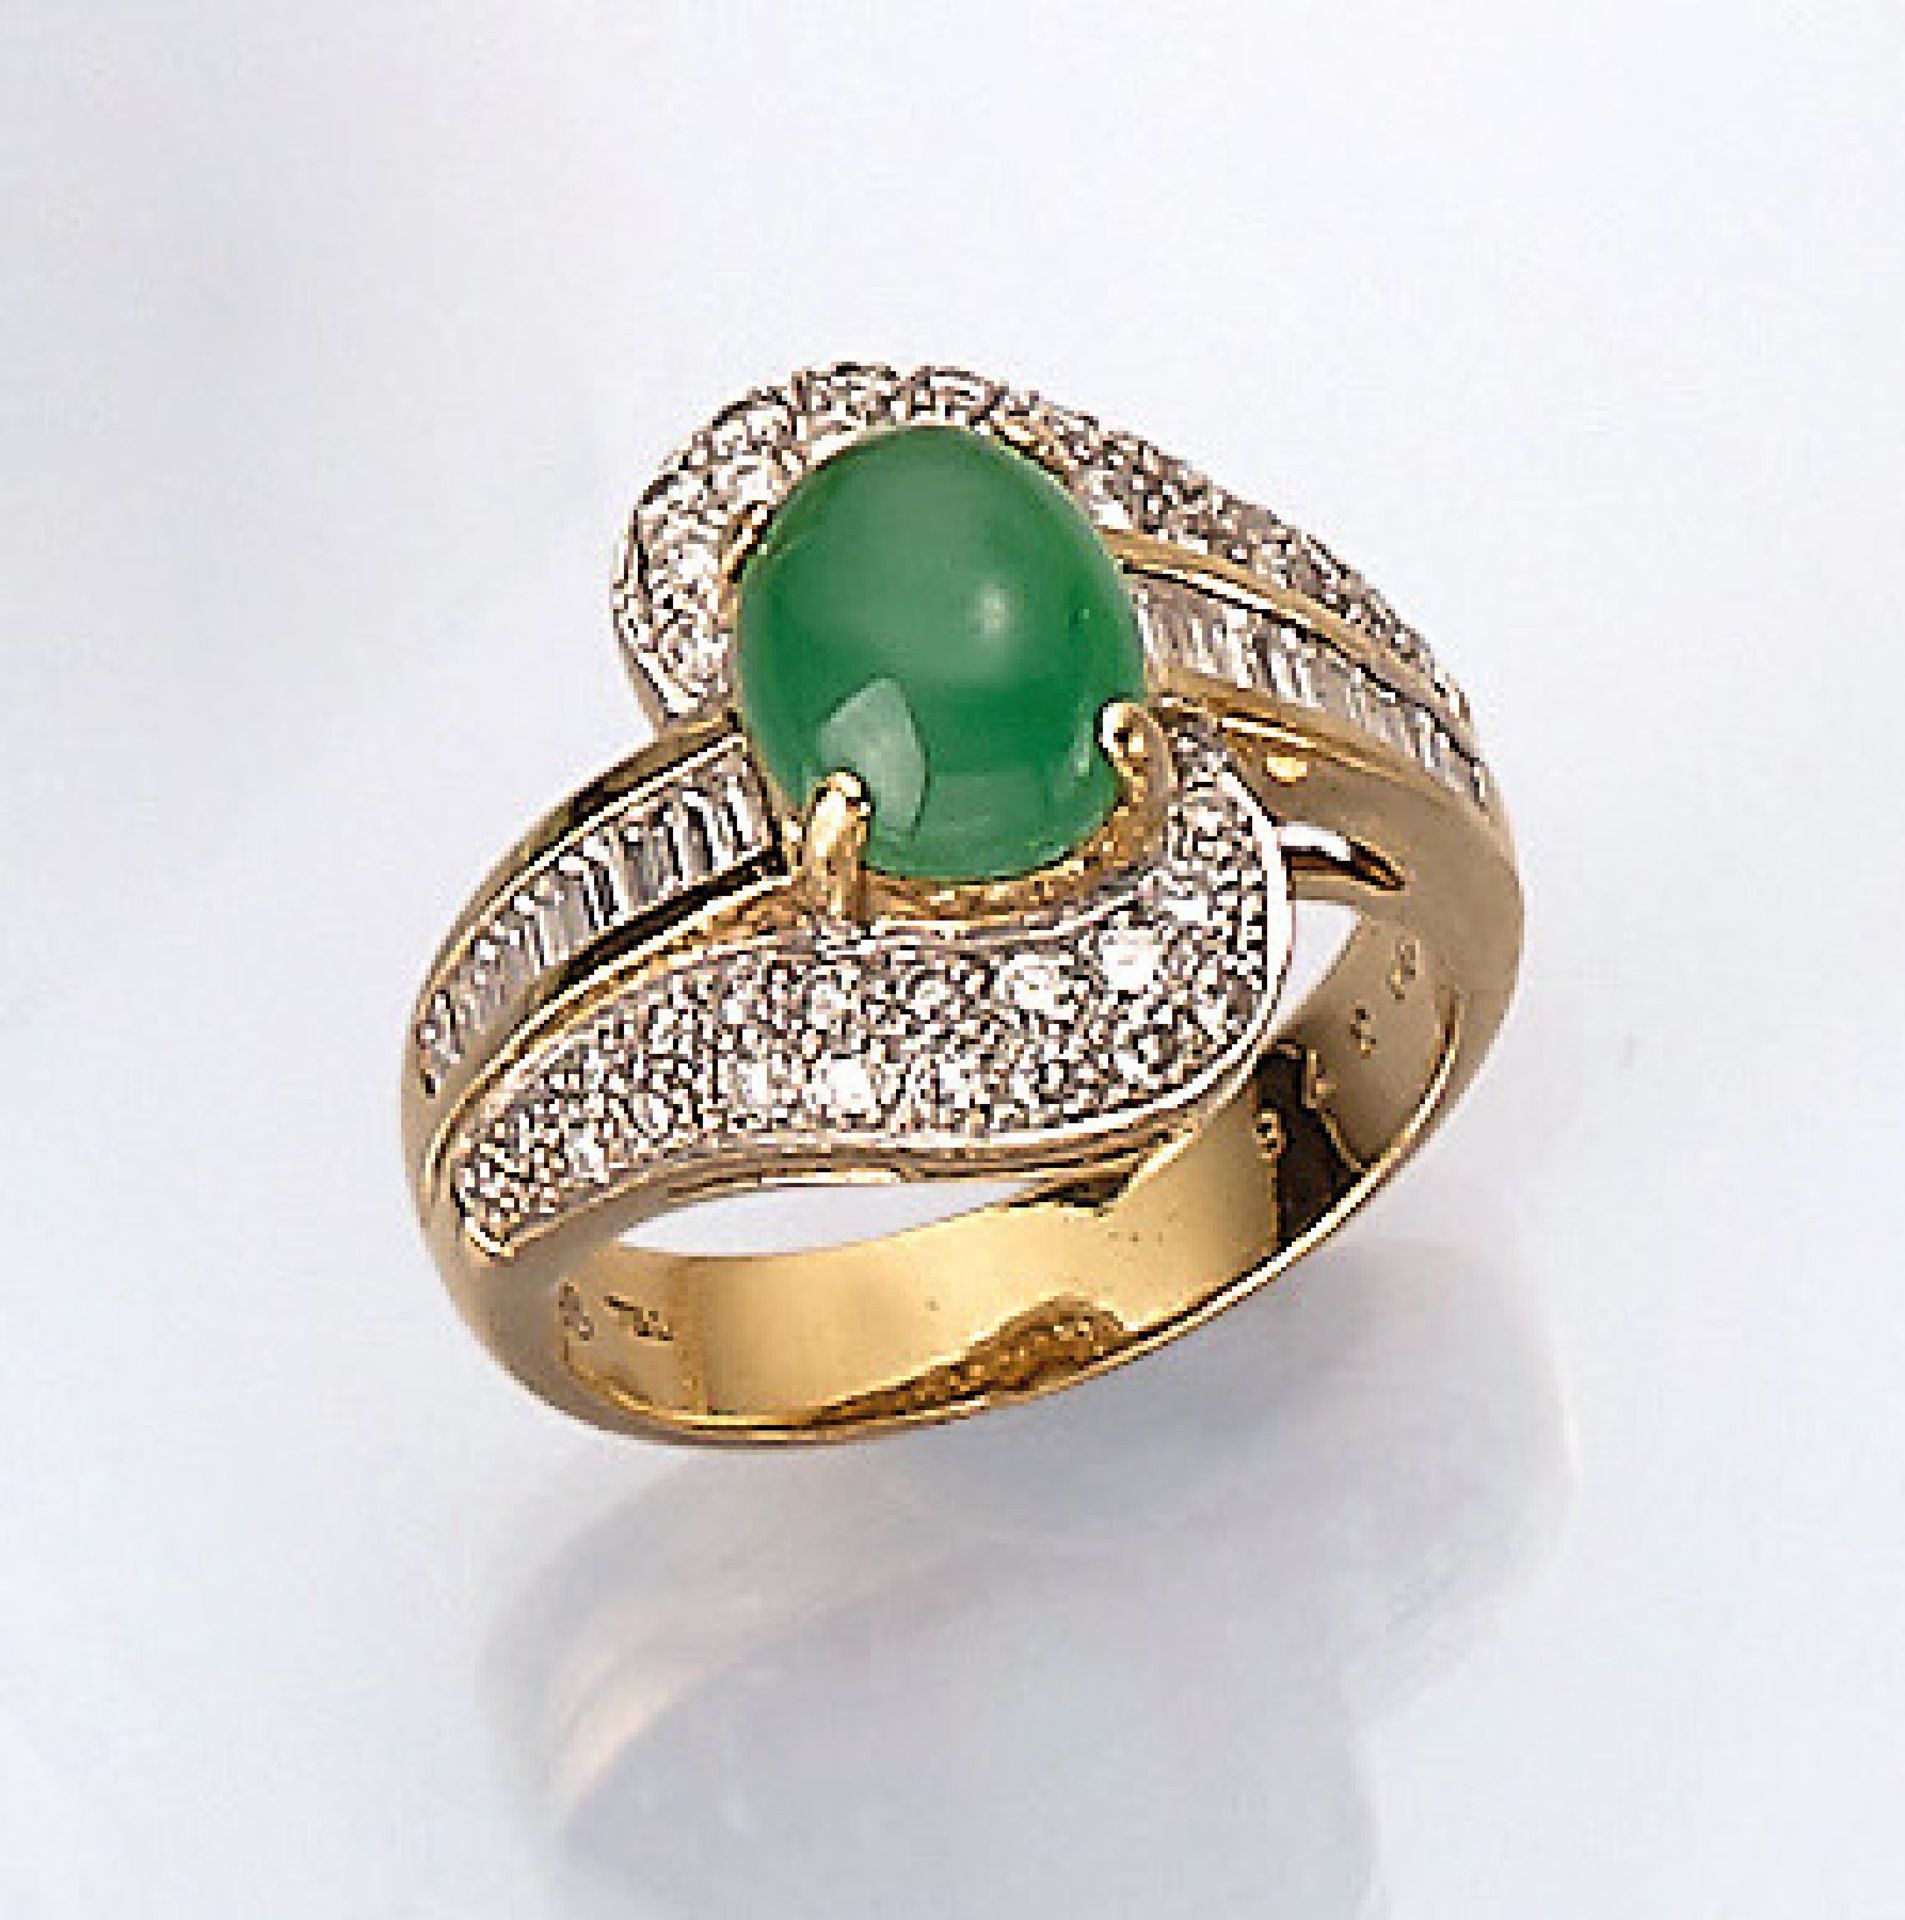 18 kt Gold Ring mit Jade und Diamanten, GG 750/000, Jadecabochon ca. 3.78 ct (grav.),